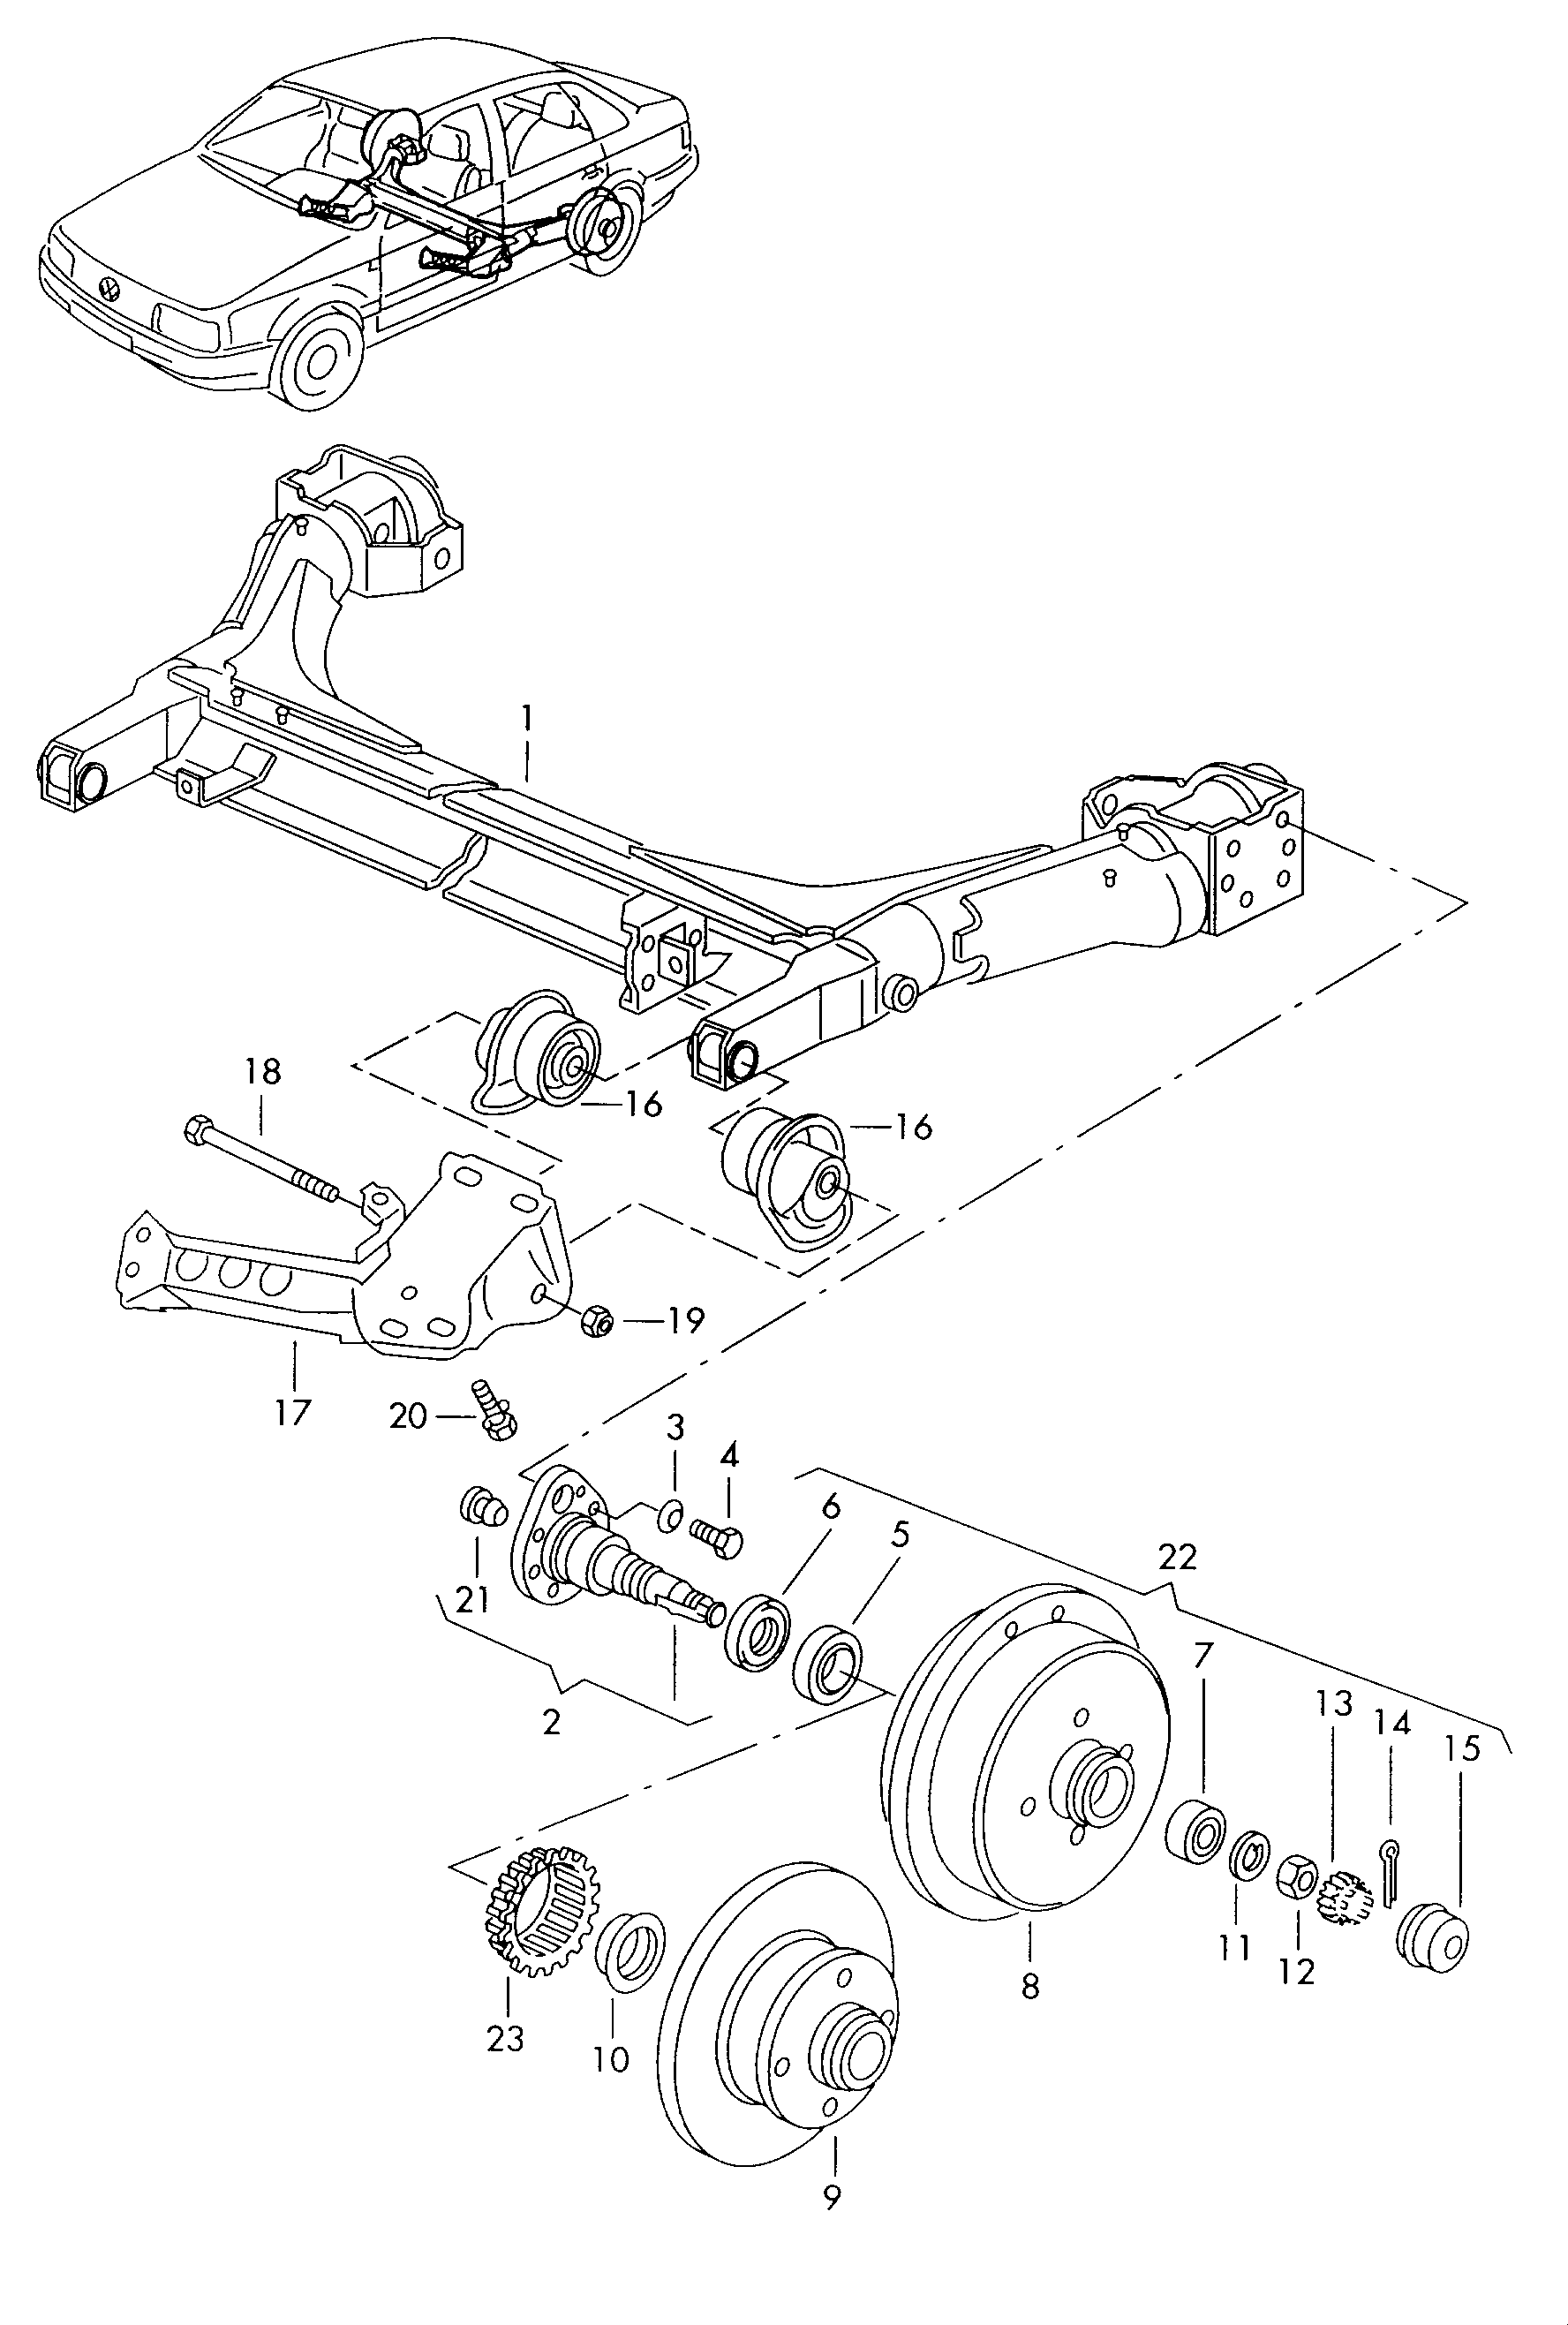 rear axle beam with attachment
parts - Passat/4Motion/Santana(PA)  